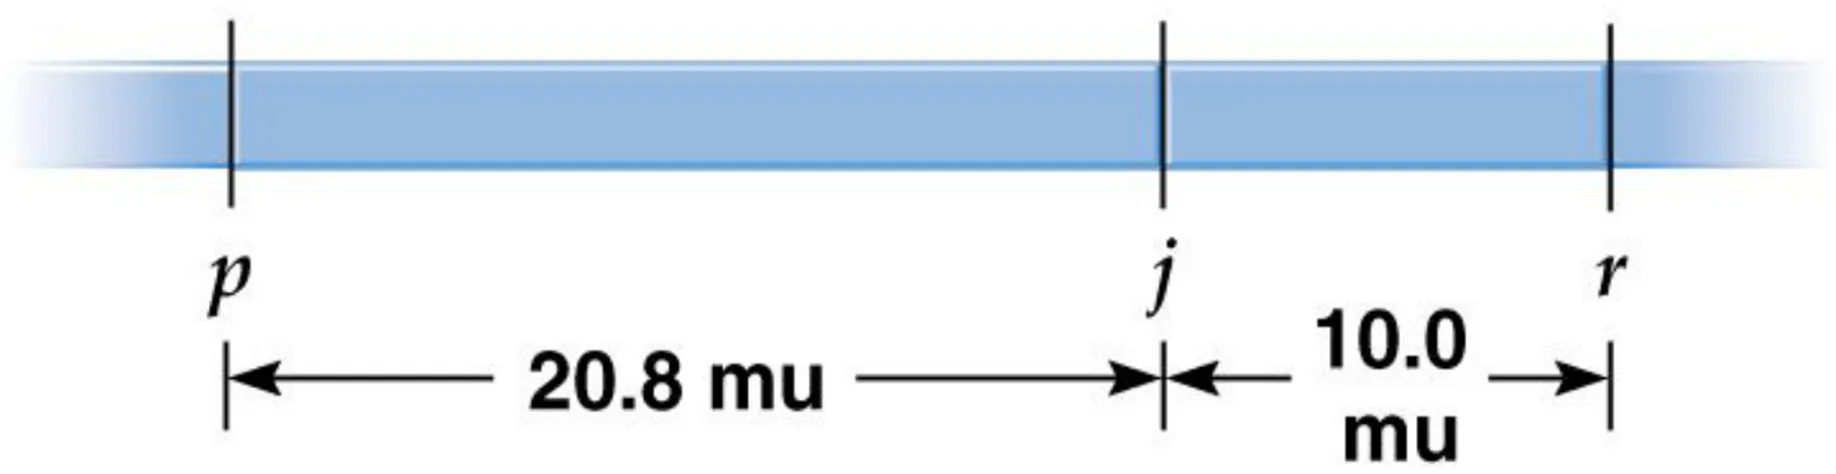 Gambar Peta Kromosom (autosom)